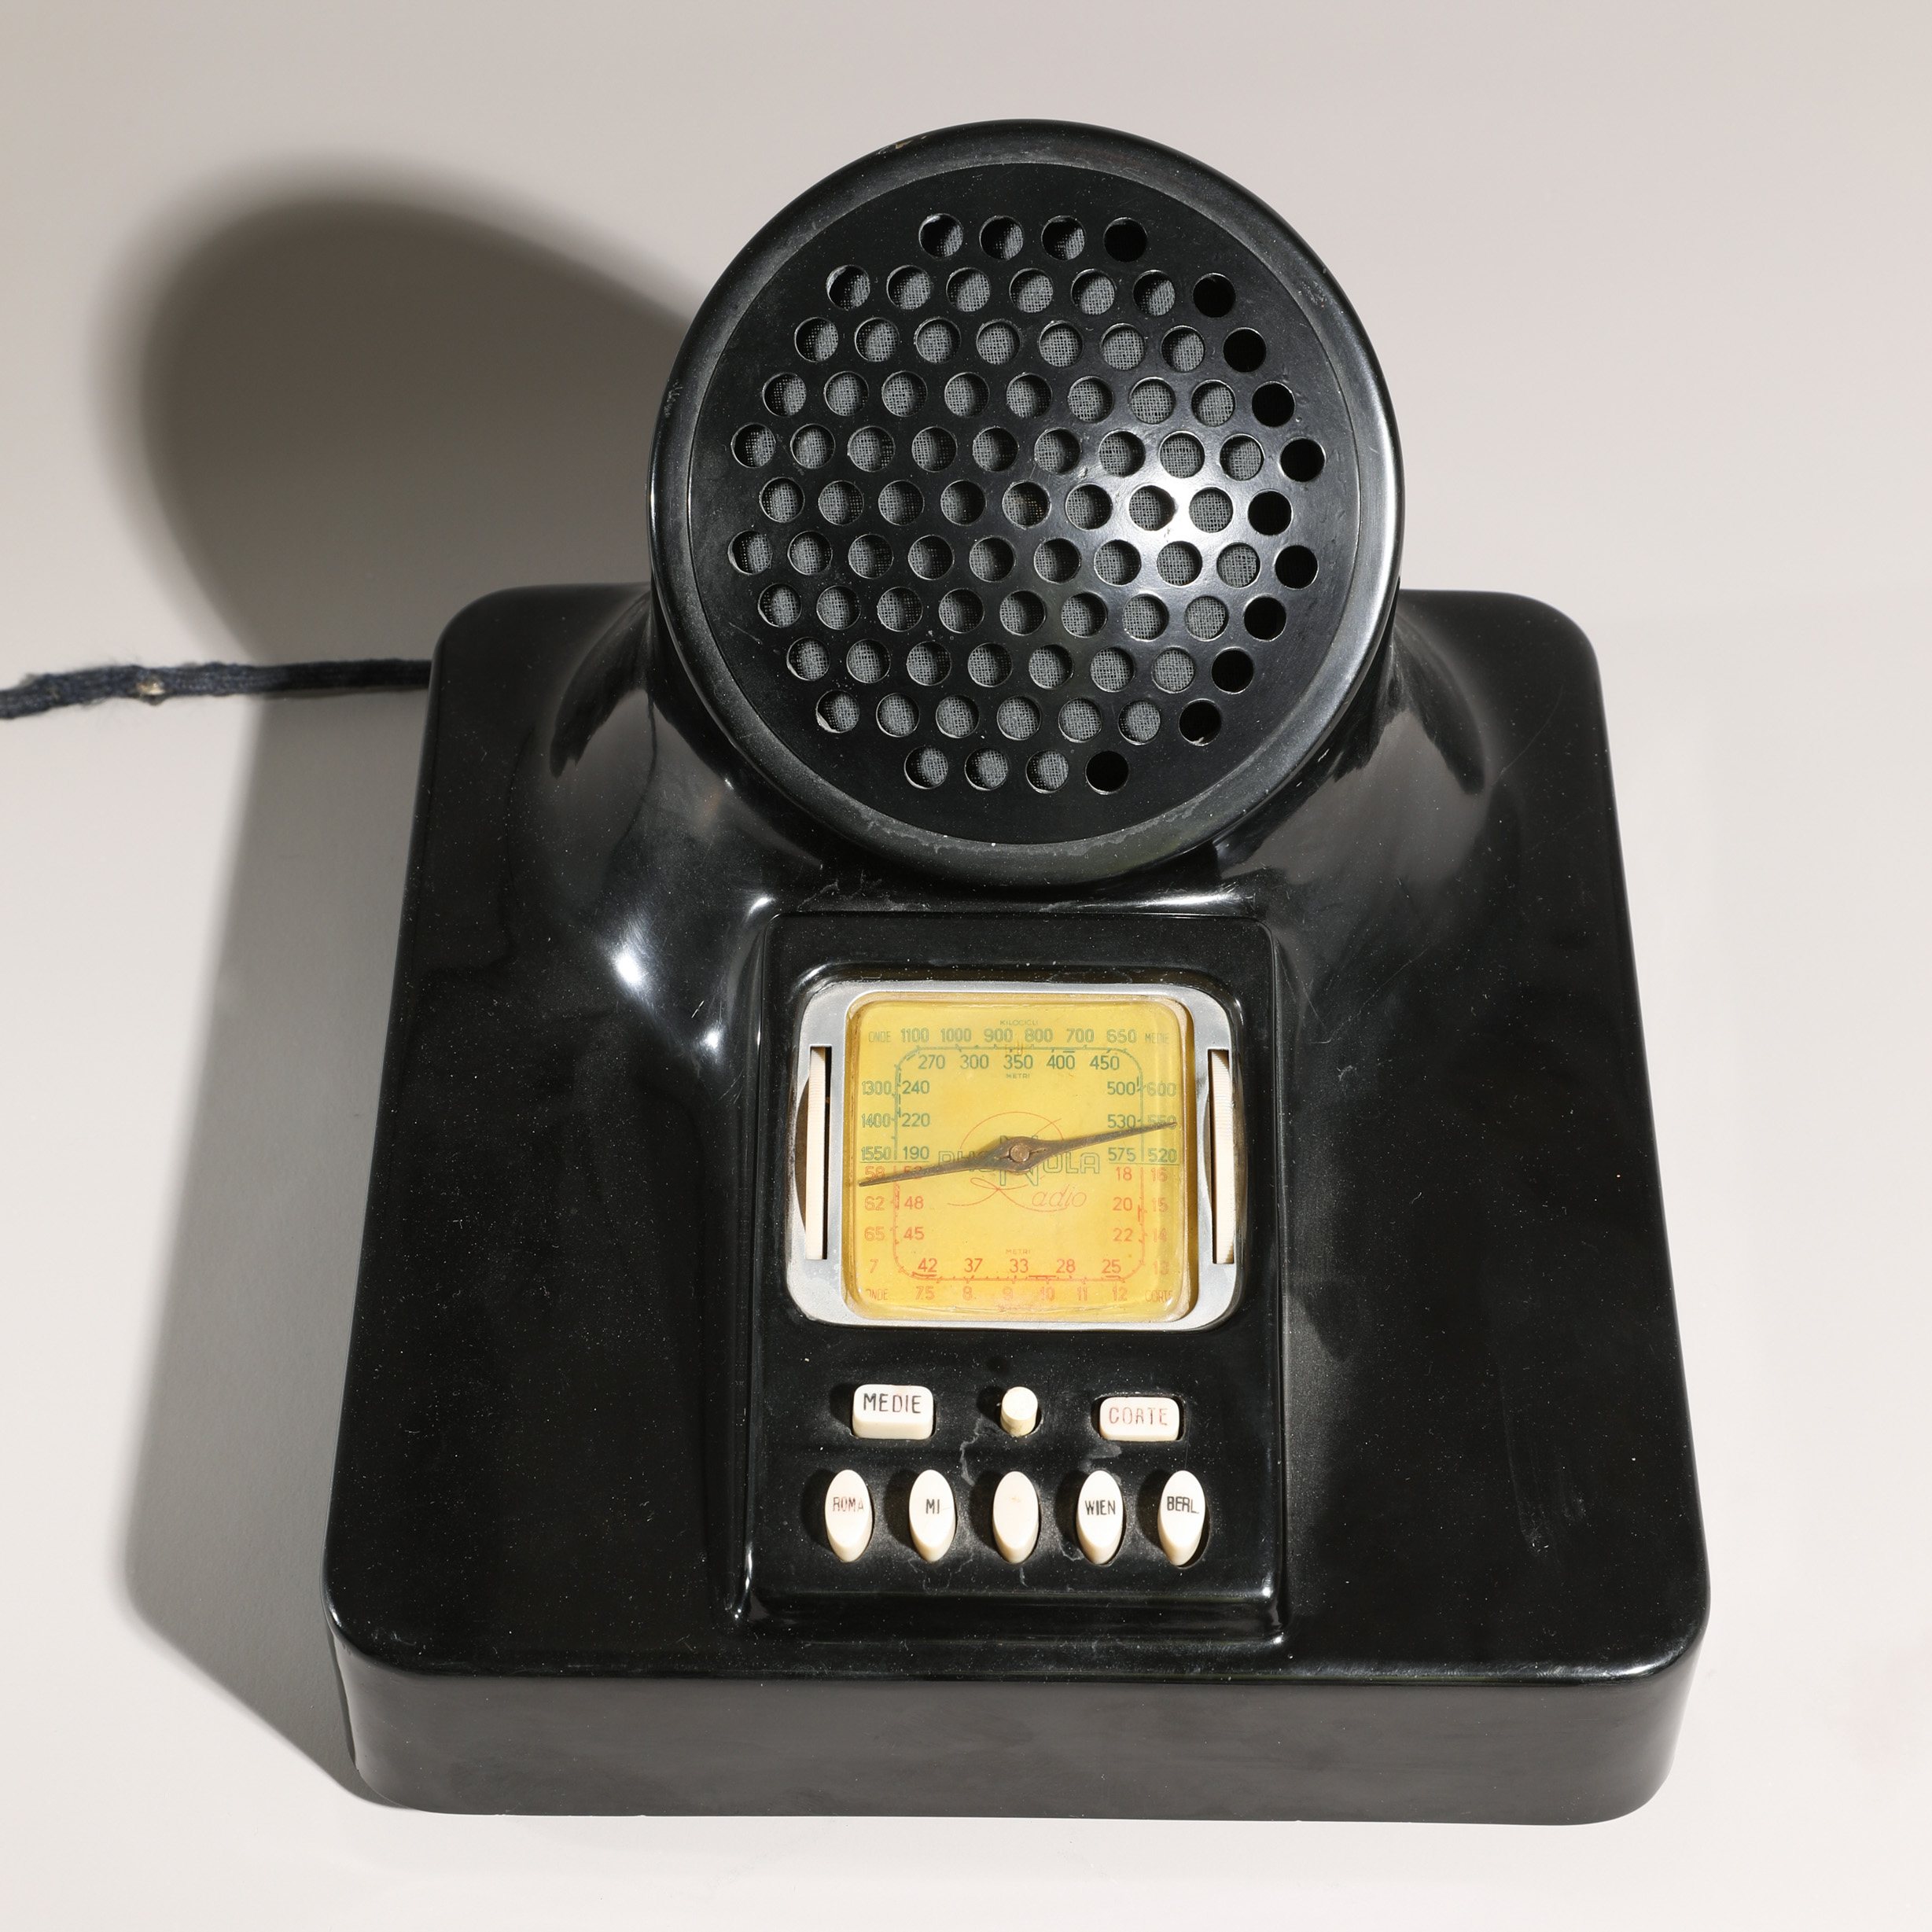 Castinglioni & Caccia Dominioni, Phonola Radio, Model 547 - Image 2 of 5